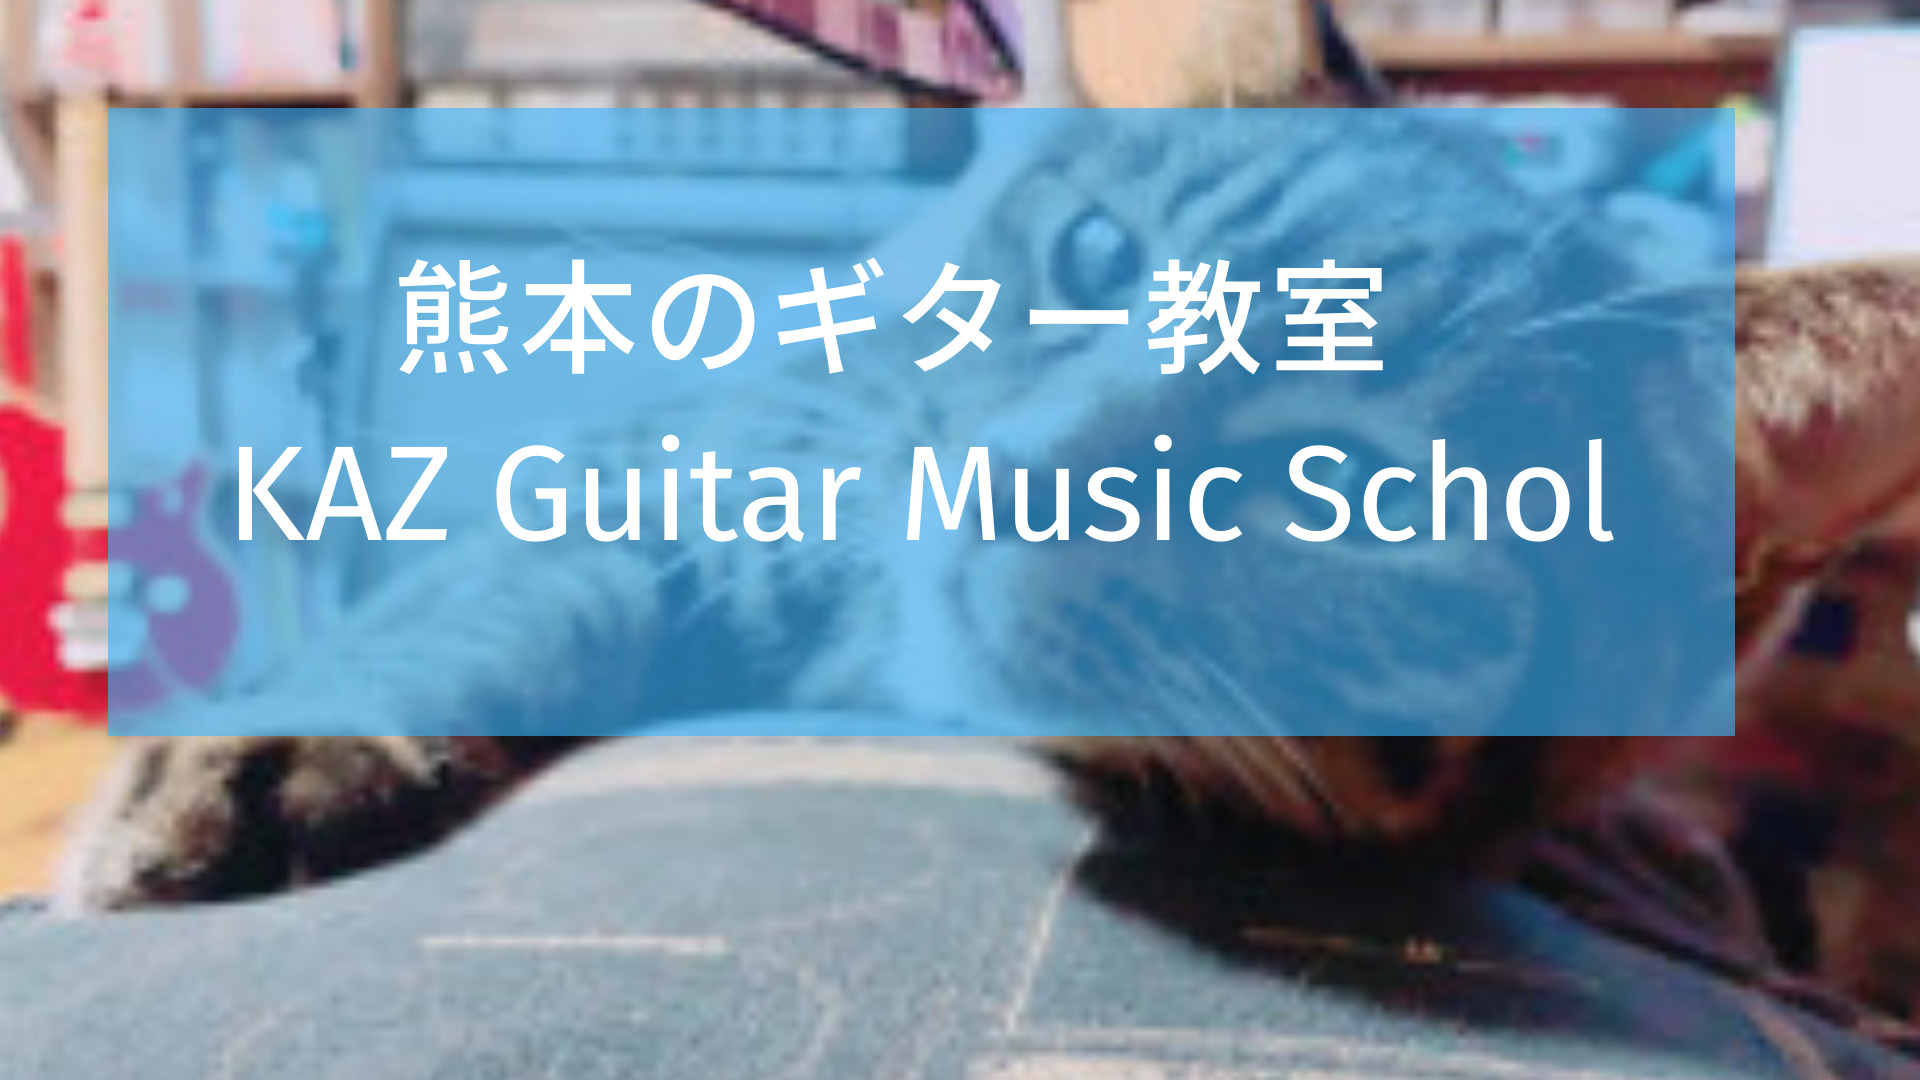 熊本KAZ Guitar Music School